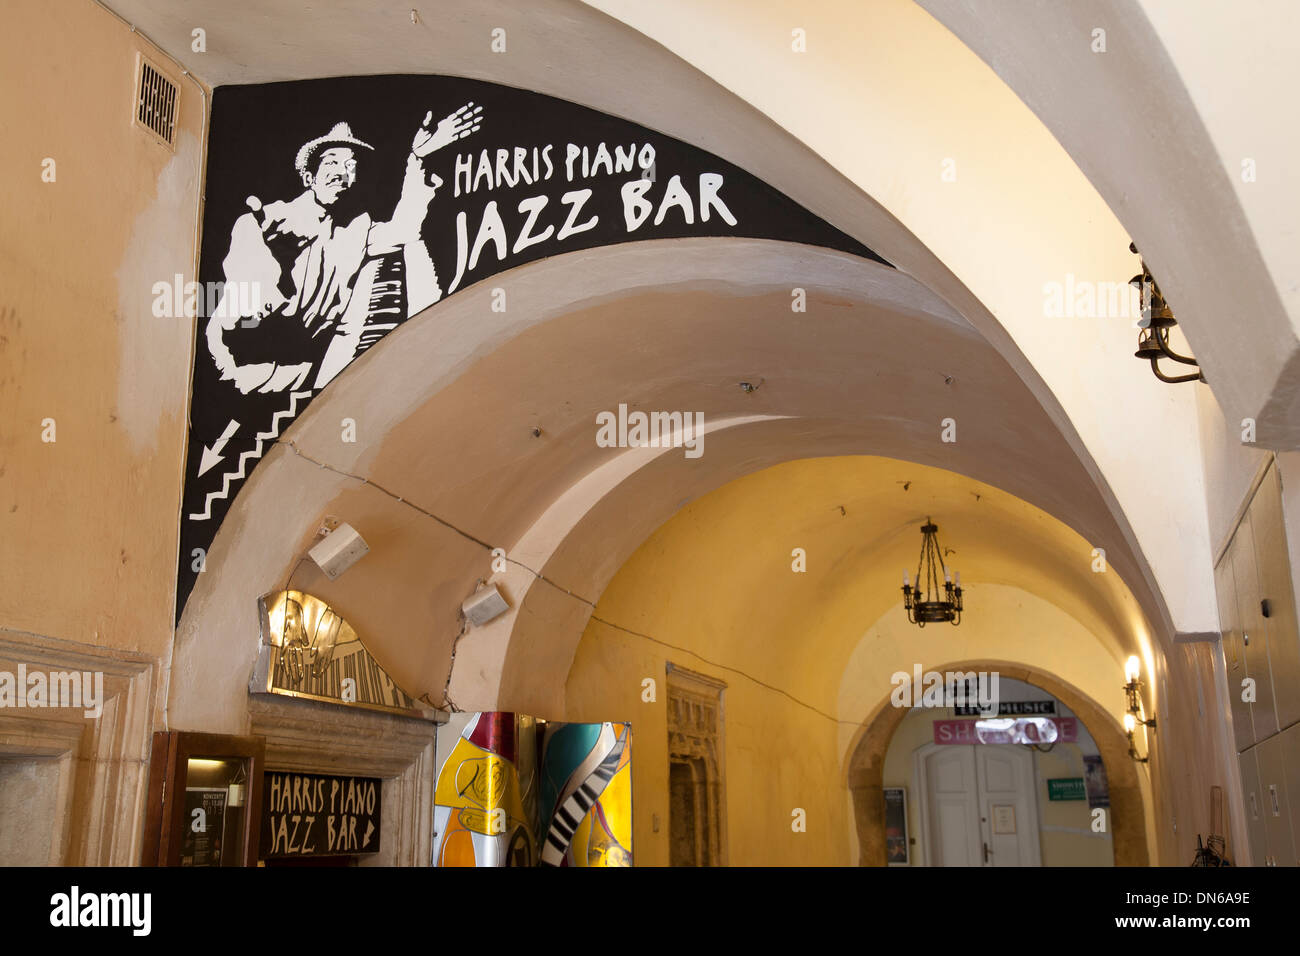 Harris Piano Jazz Bar Sign, Krakow; Poland Stock Photo - Alamy